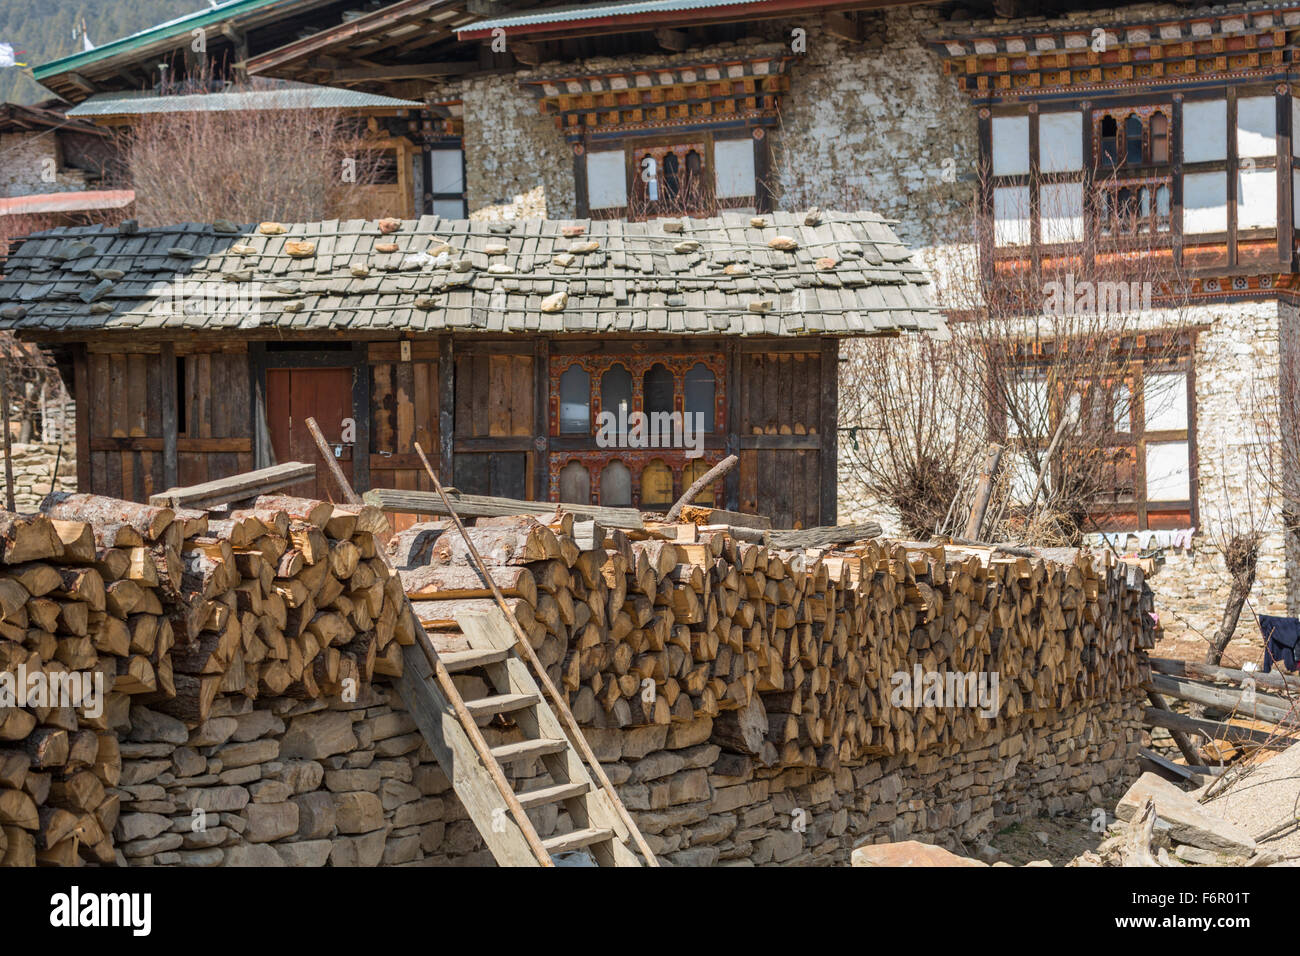 Village of Ura, Bumthang, Bhutan Stock Photo